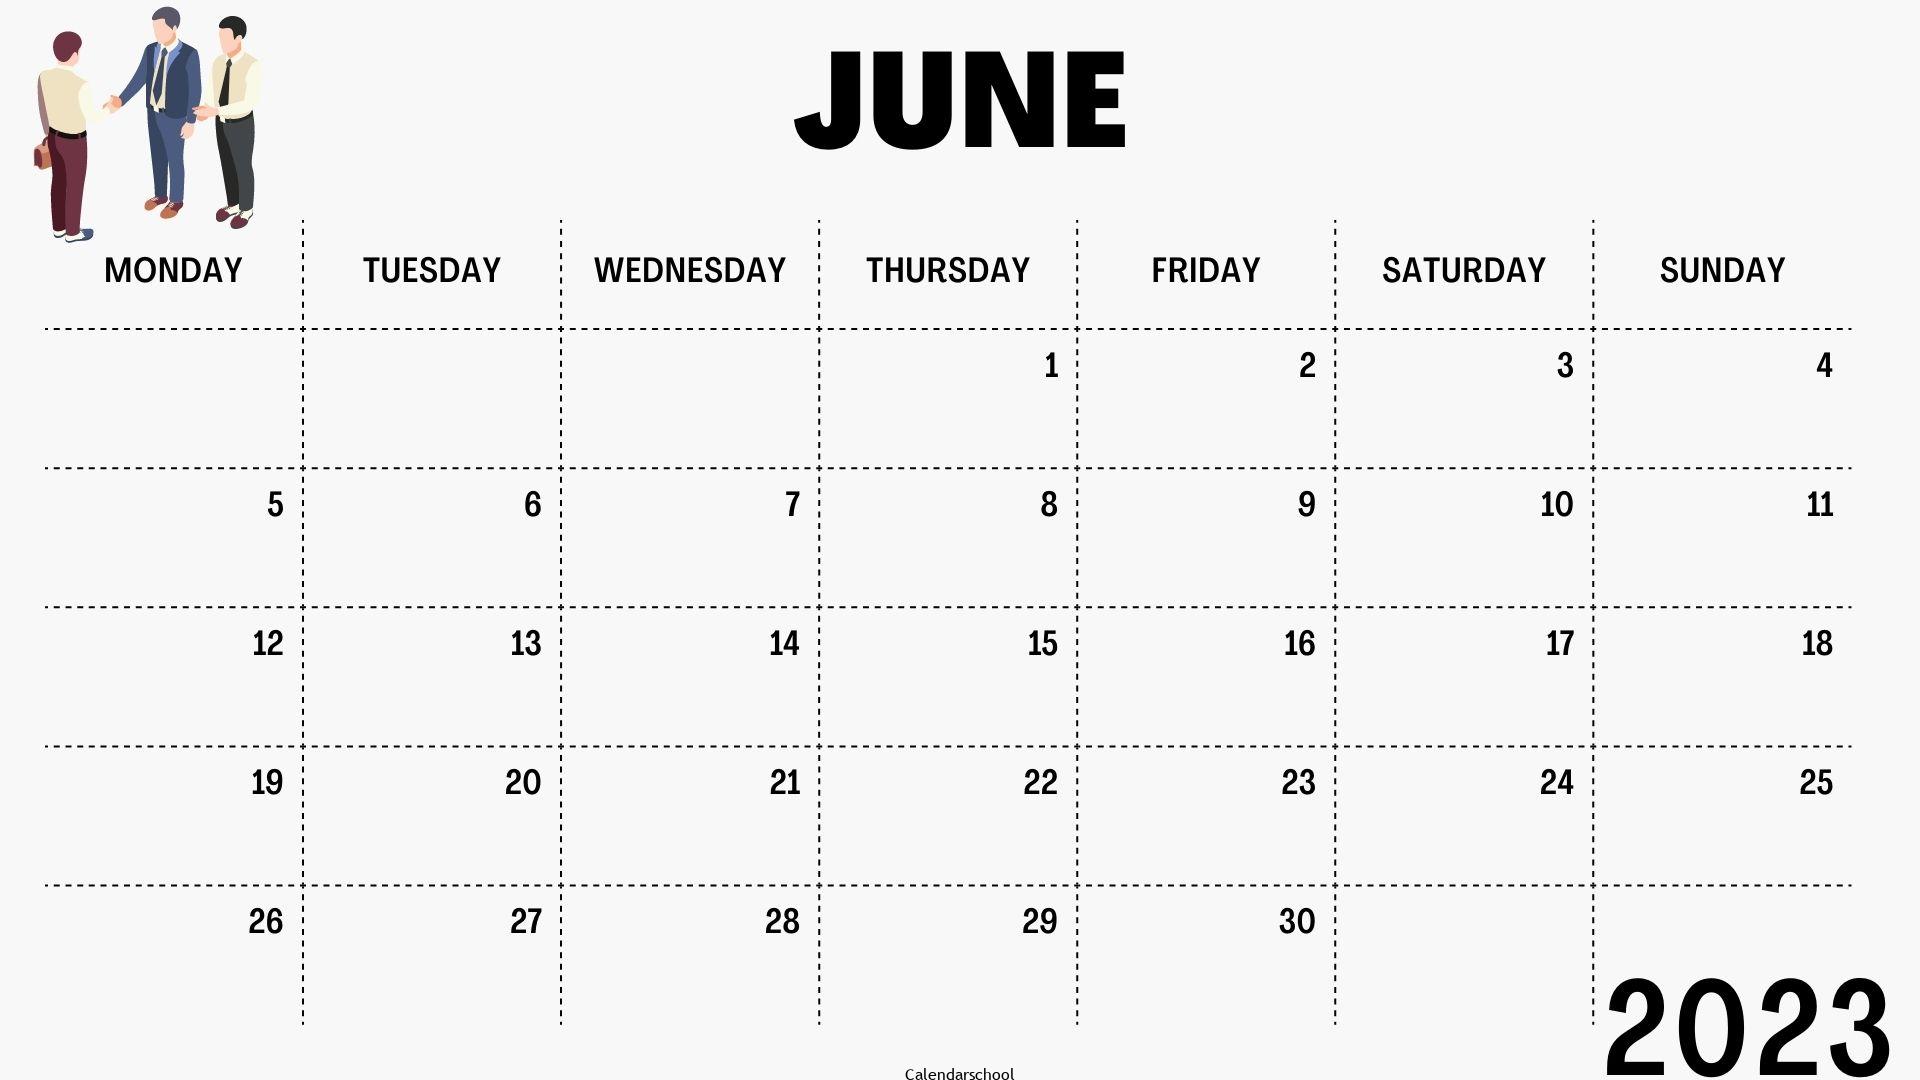 Calendar Dates For 2023 June